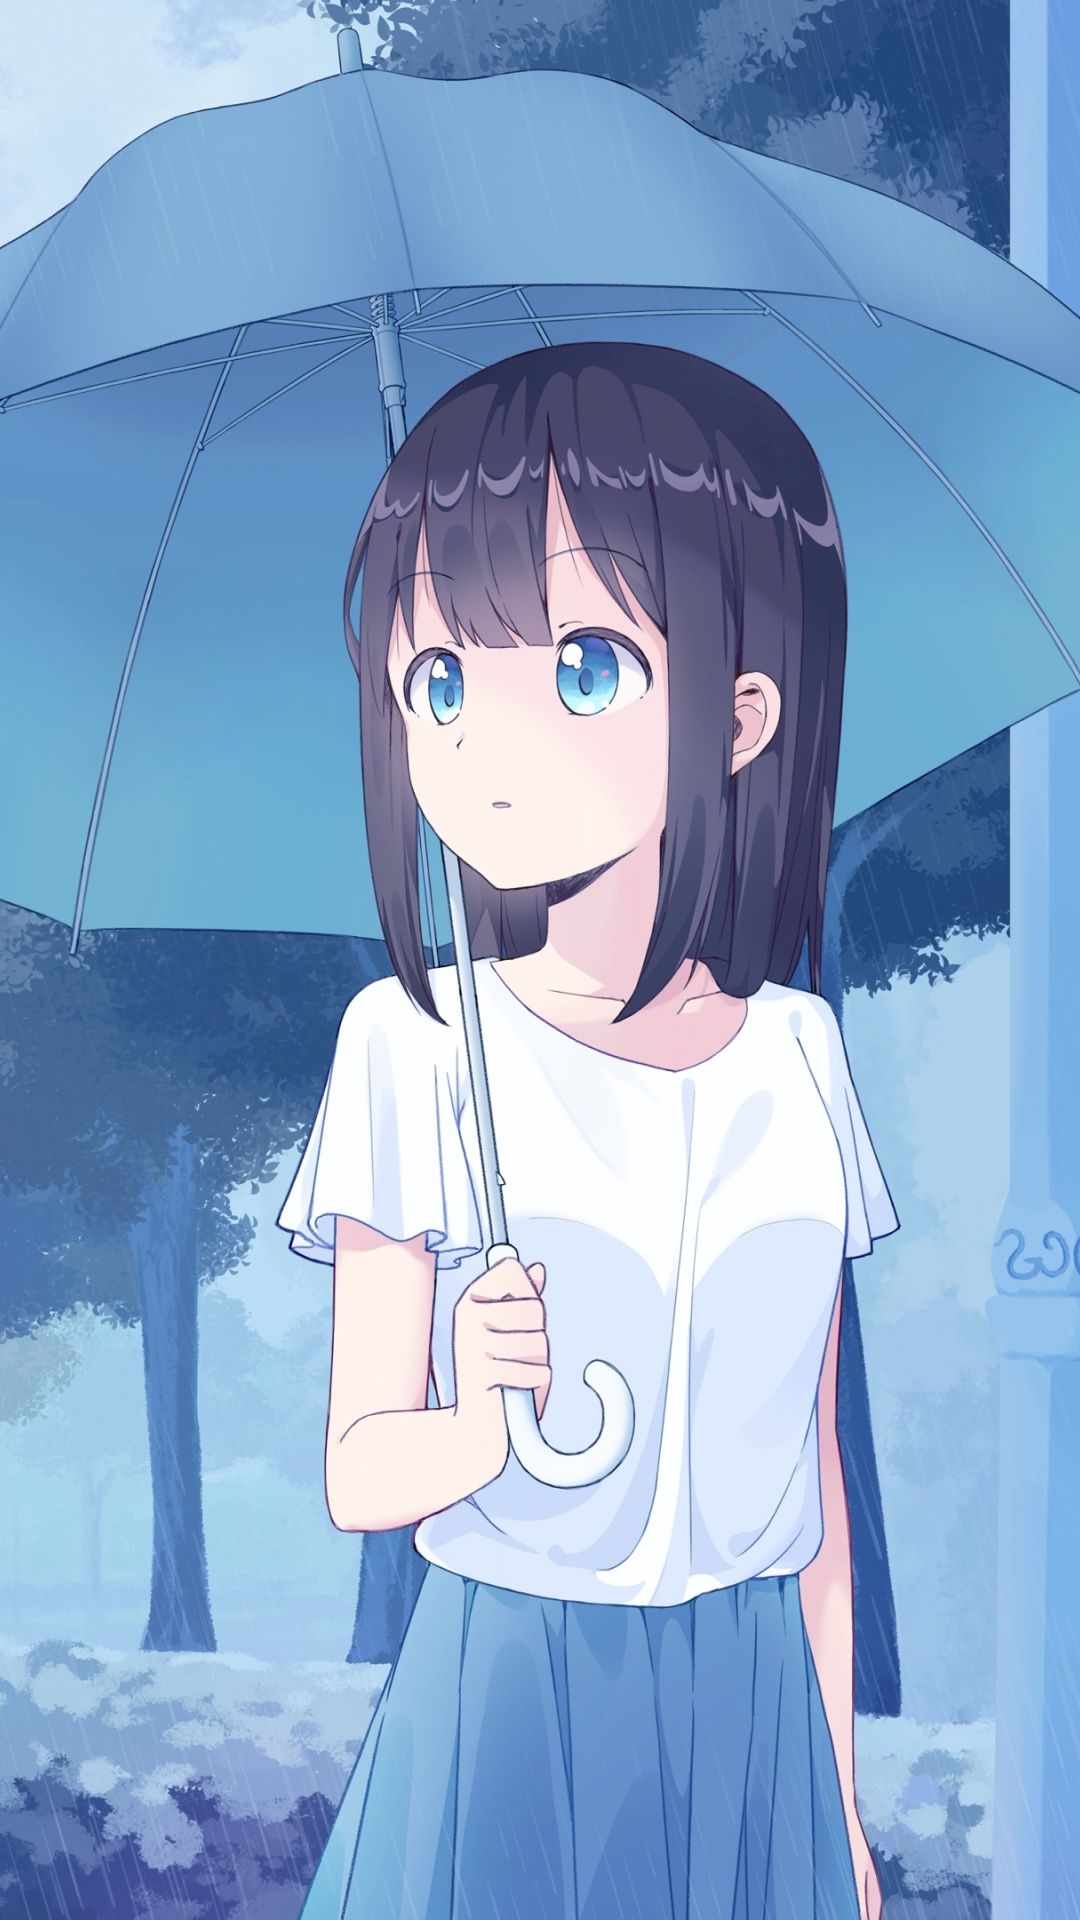 Download Anime girl with umbrella, cute, art wallpaper, 1080x1920